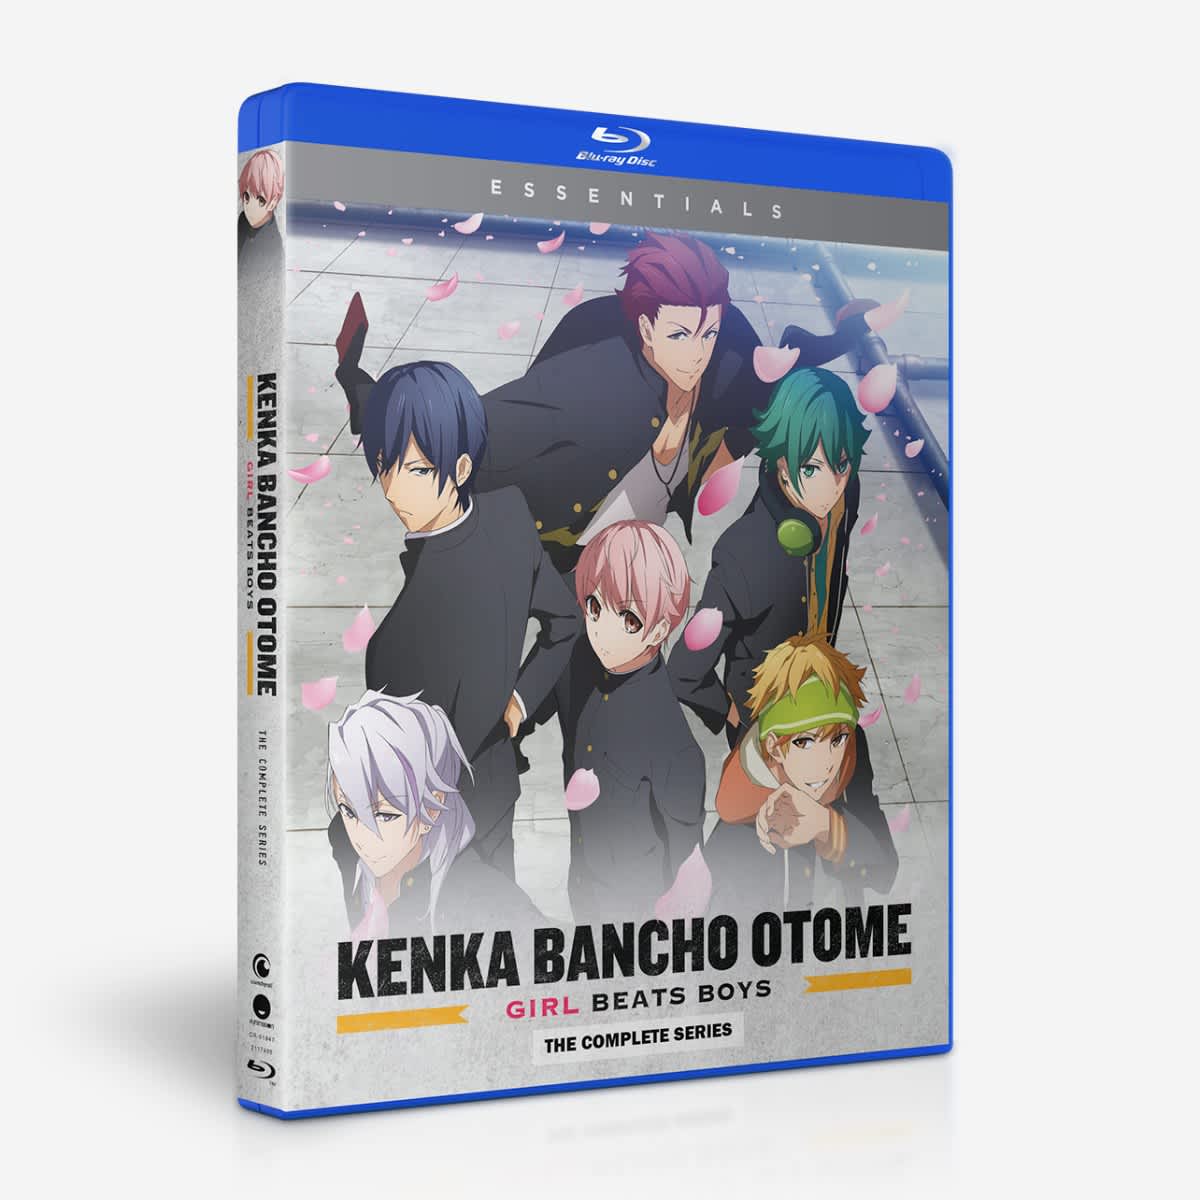 Kenka Bancho Otome Girl Beats Boys - The Complete Series